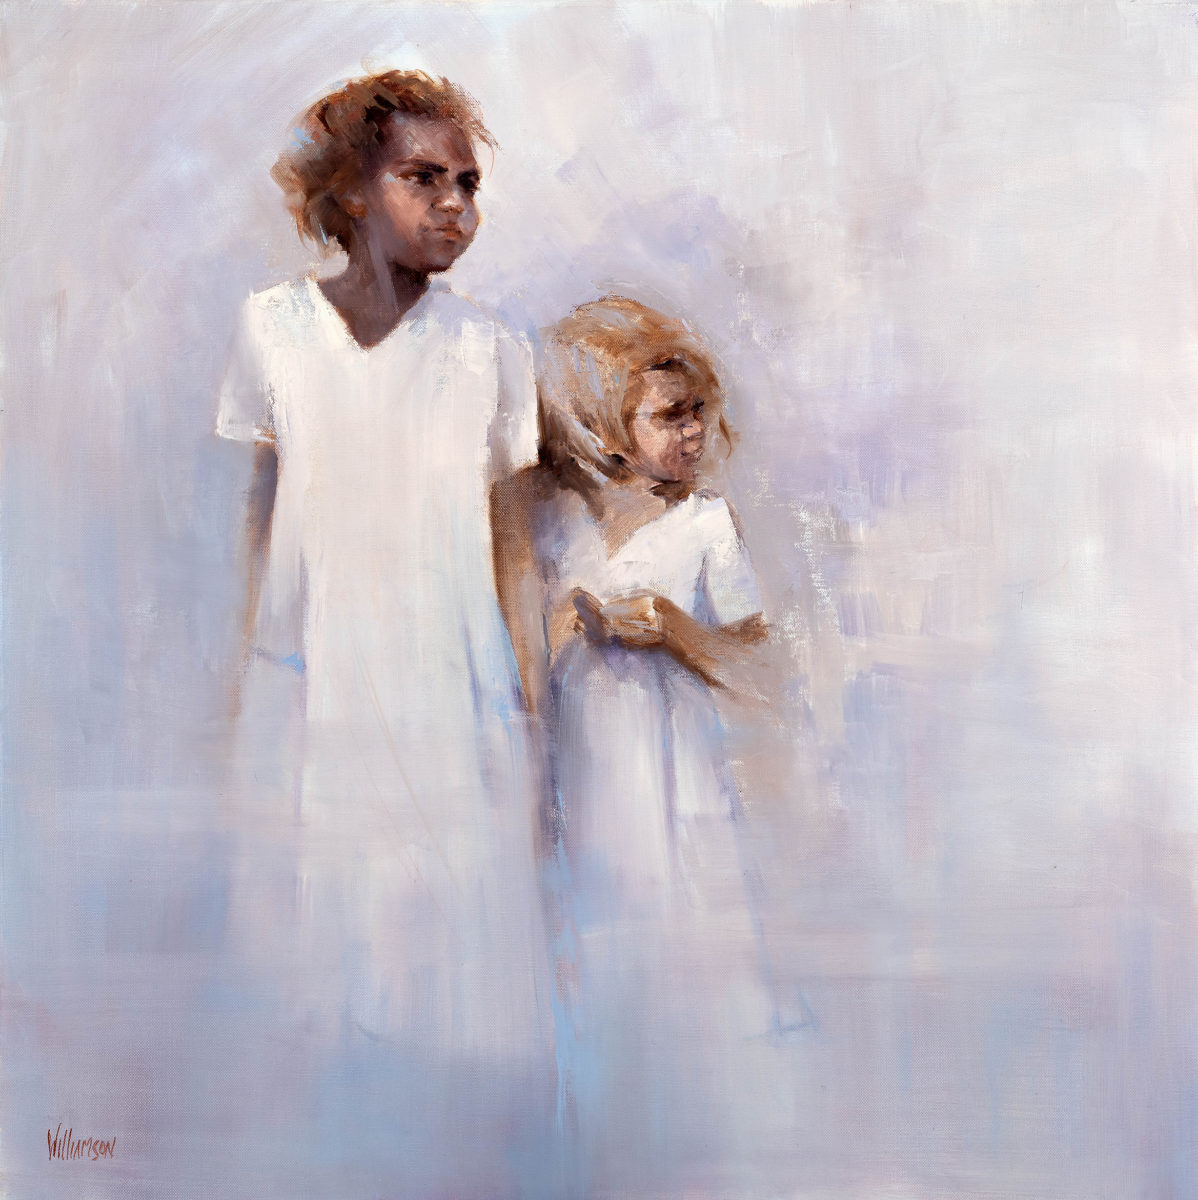 Sisters | Jan Williamson | Oil on canvas | 76 x 76 cm | $6,500